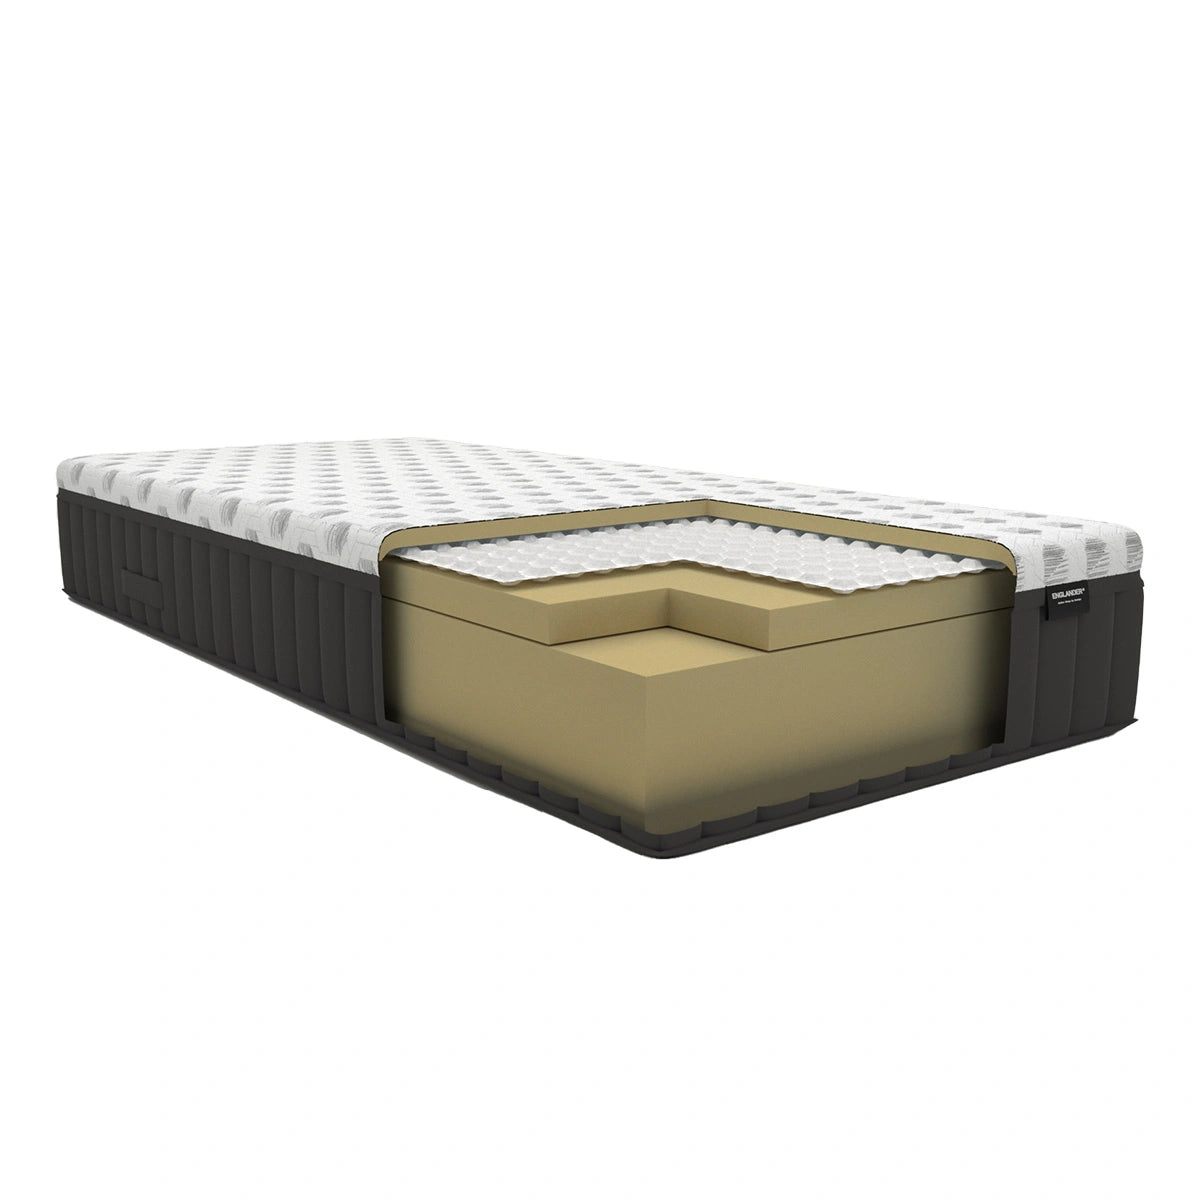 notting viscopedic hybrid mattress by englander, image of the materials used inside the mattress, plush